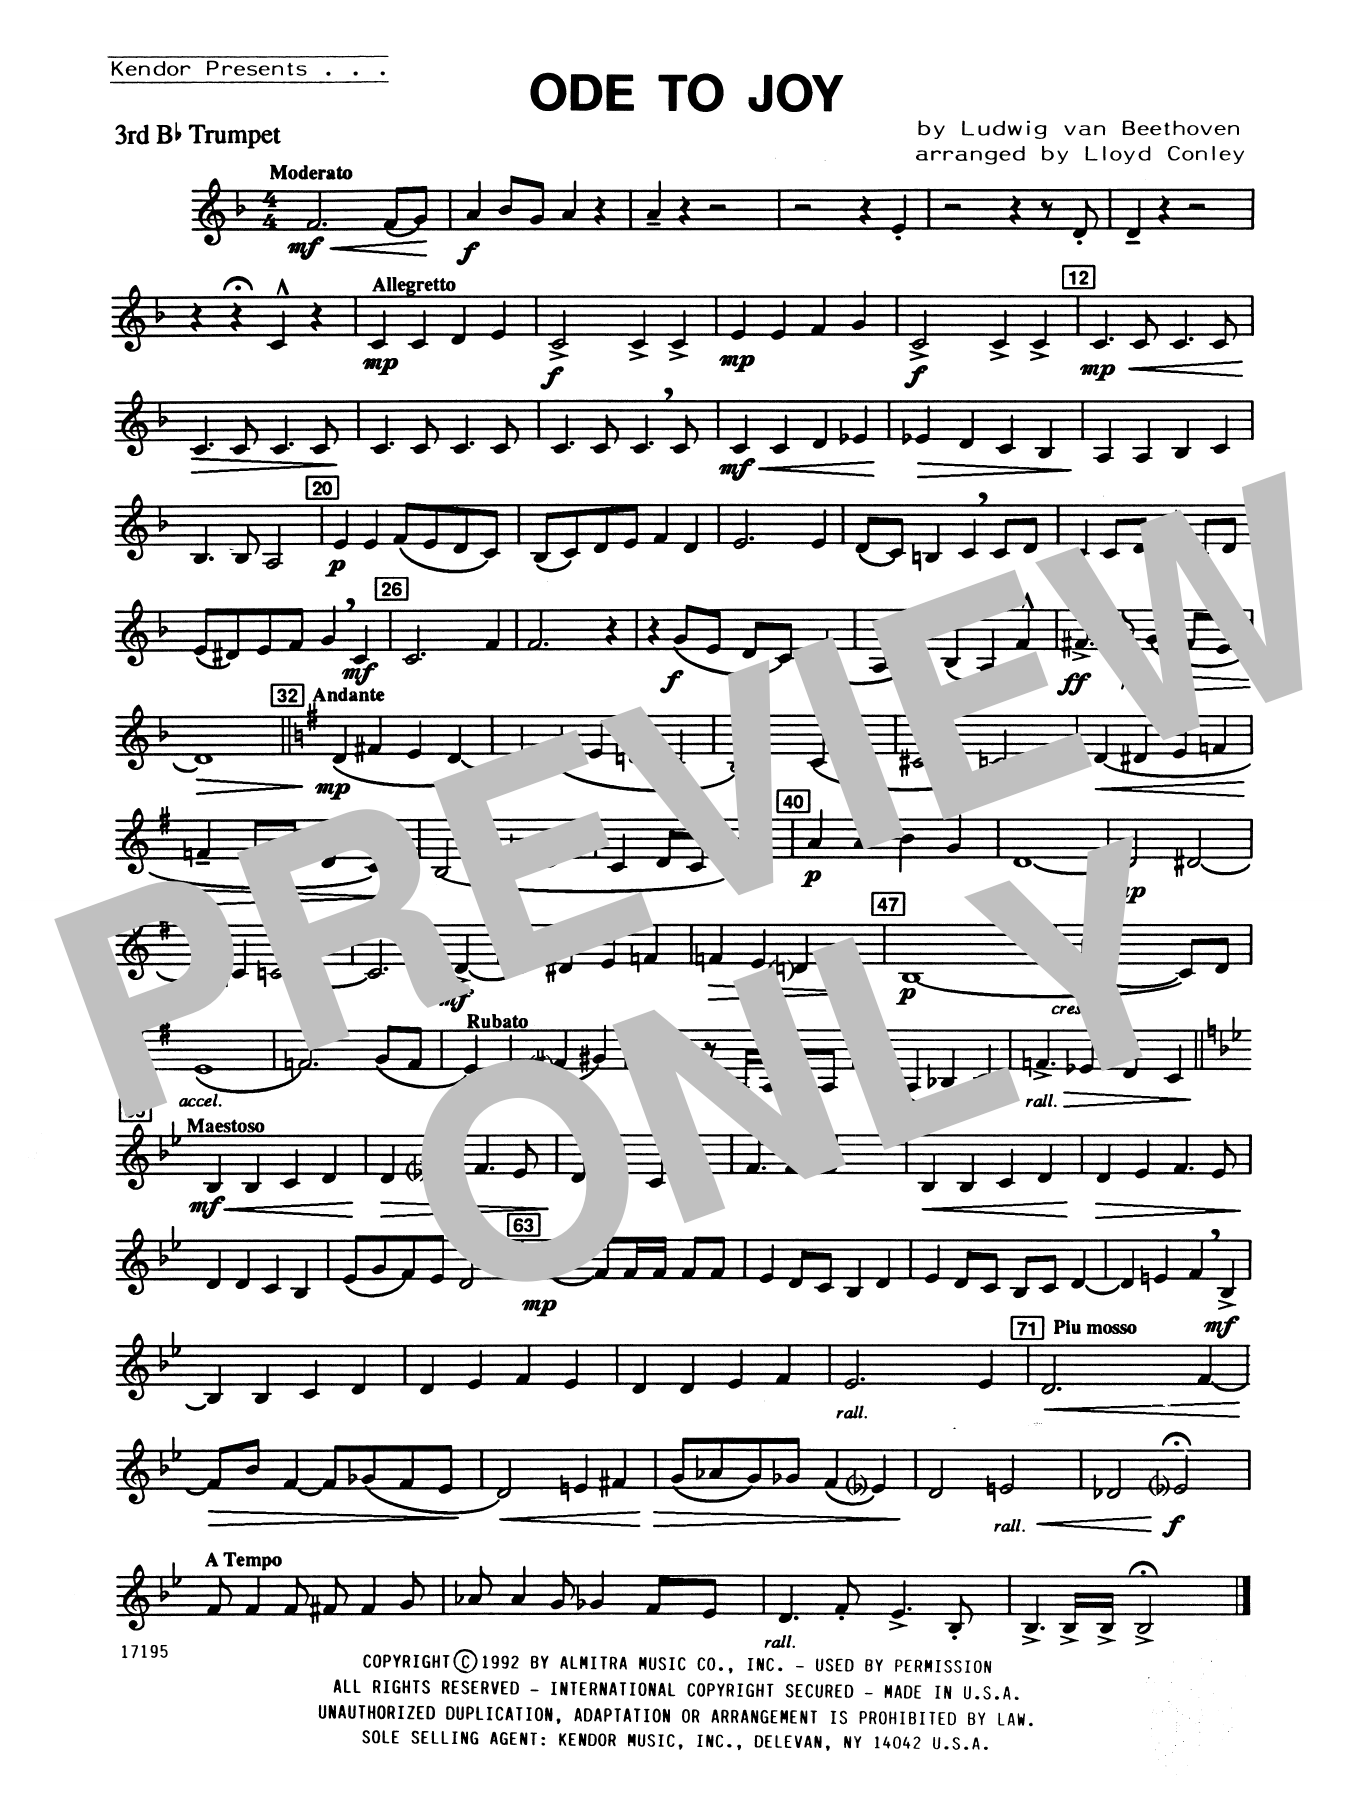 Download Lloyd Conley Ode To Joy - 3rd Bb Trumpet Sheet Music